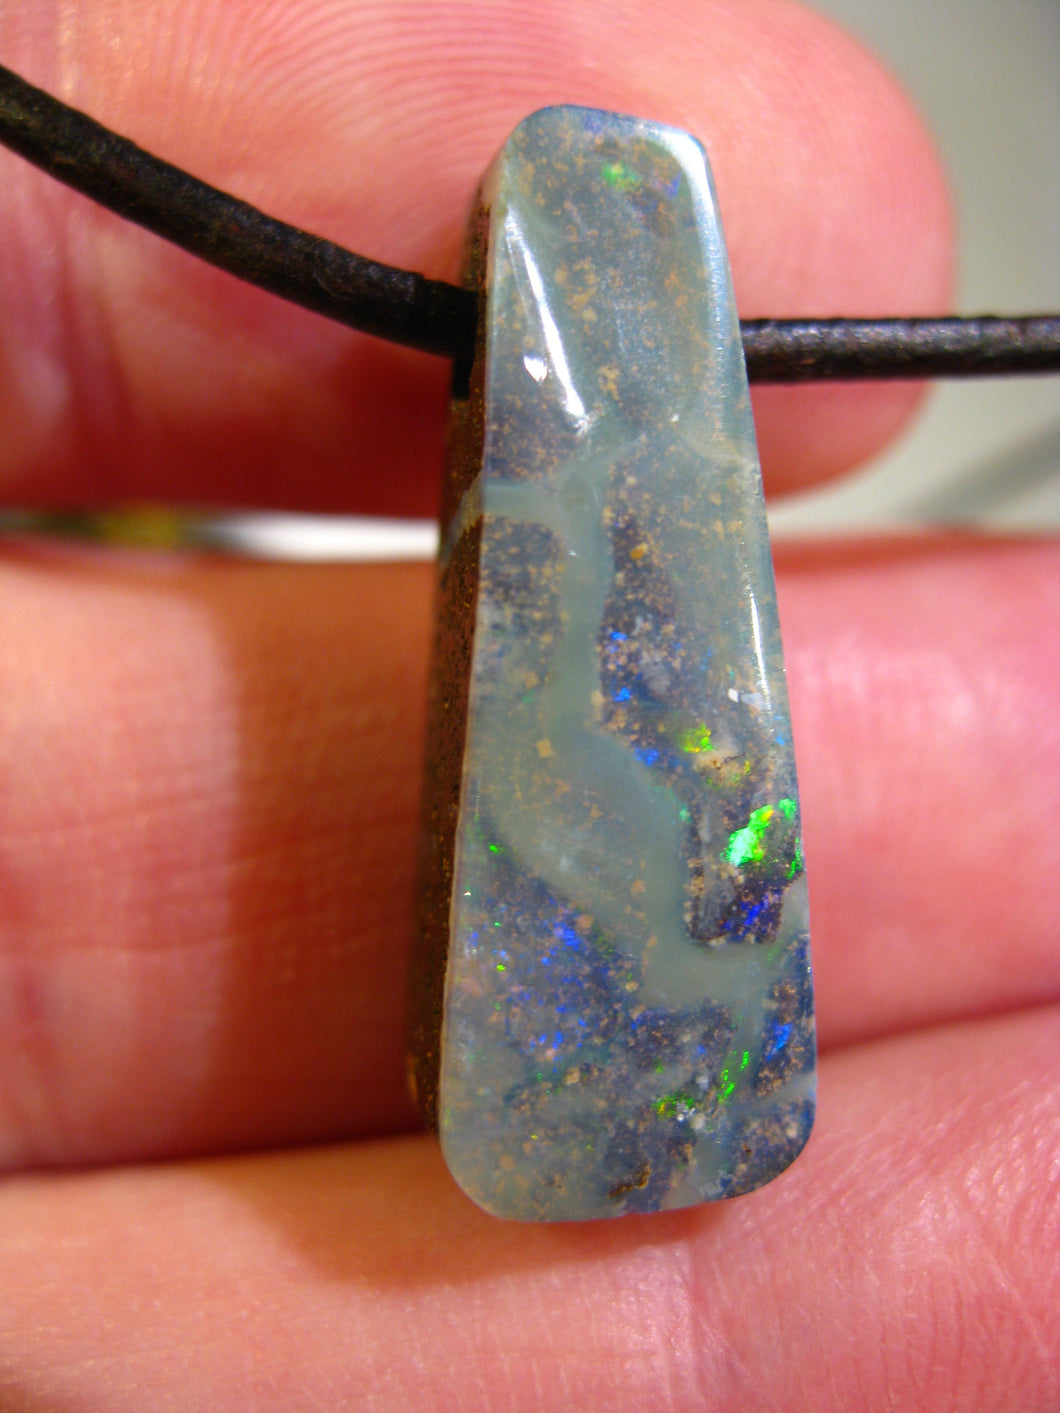 GEM Boulder Matrix Yowah NUSS Nut Opal Anhänger Traumhaftes Muster und Feuer